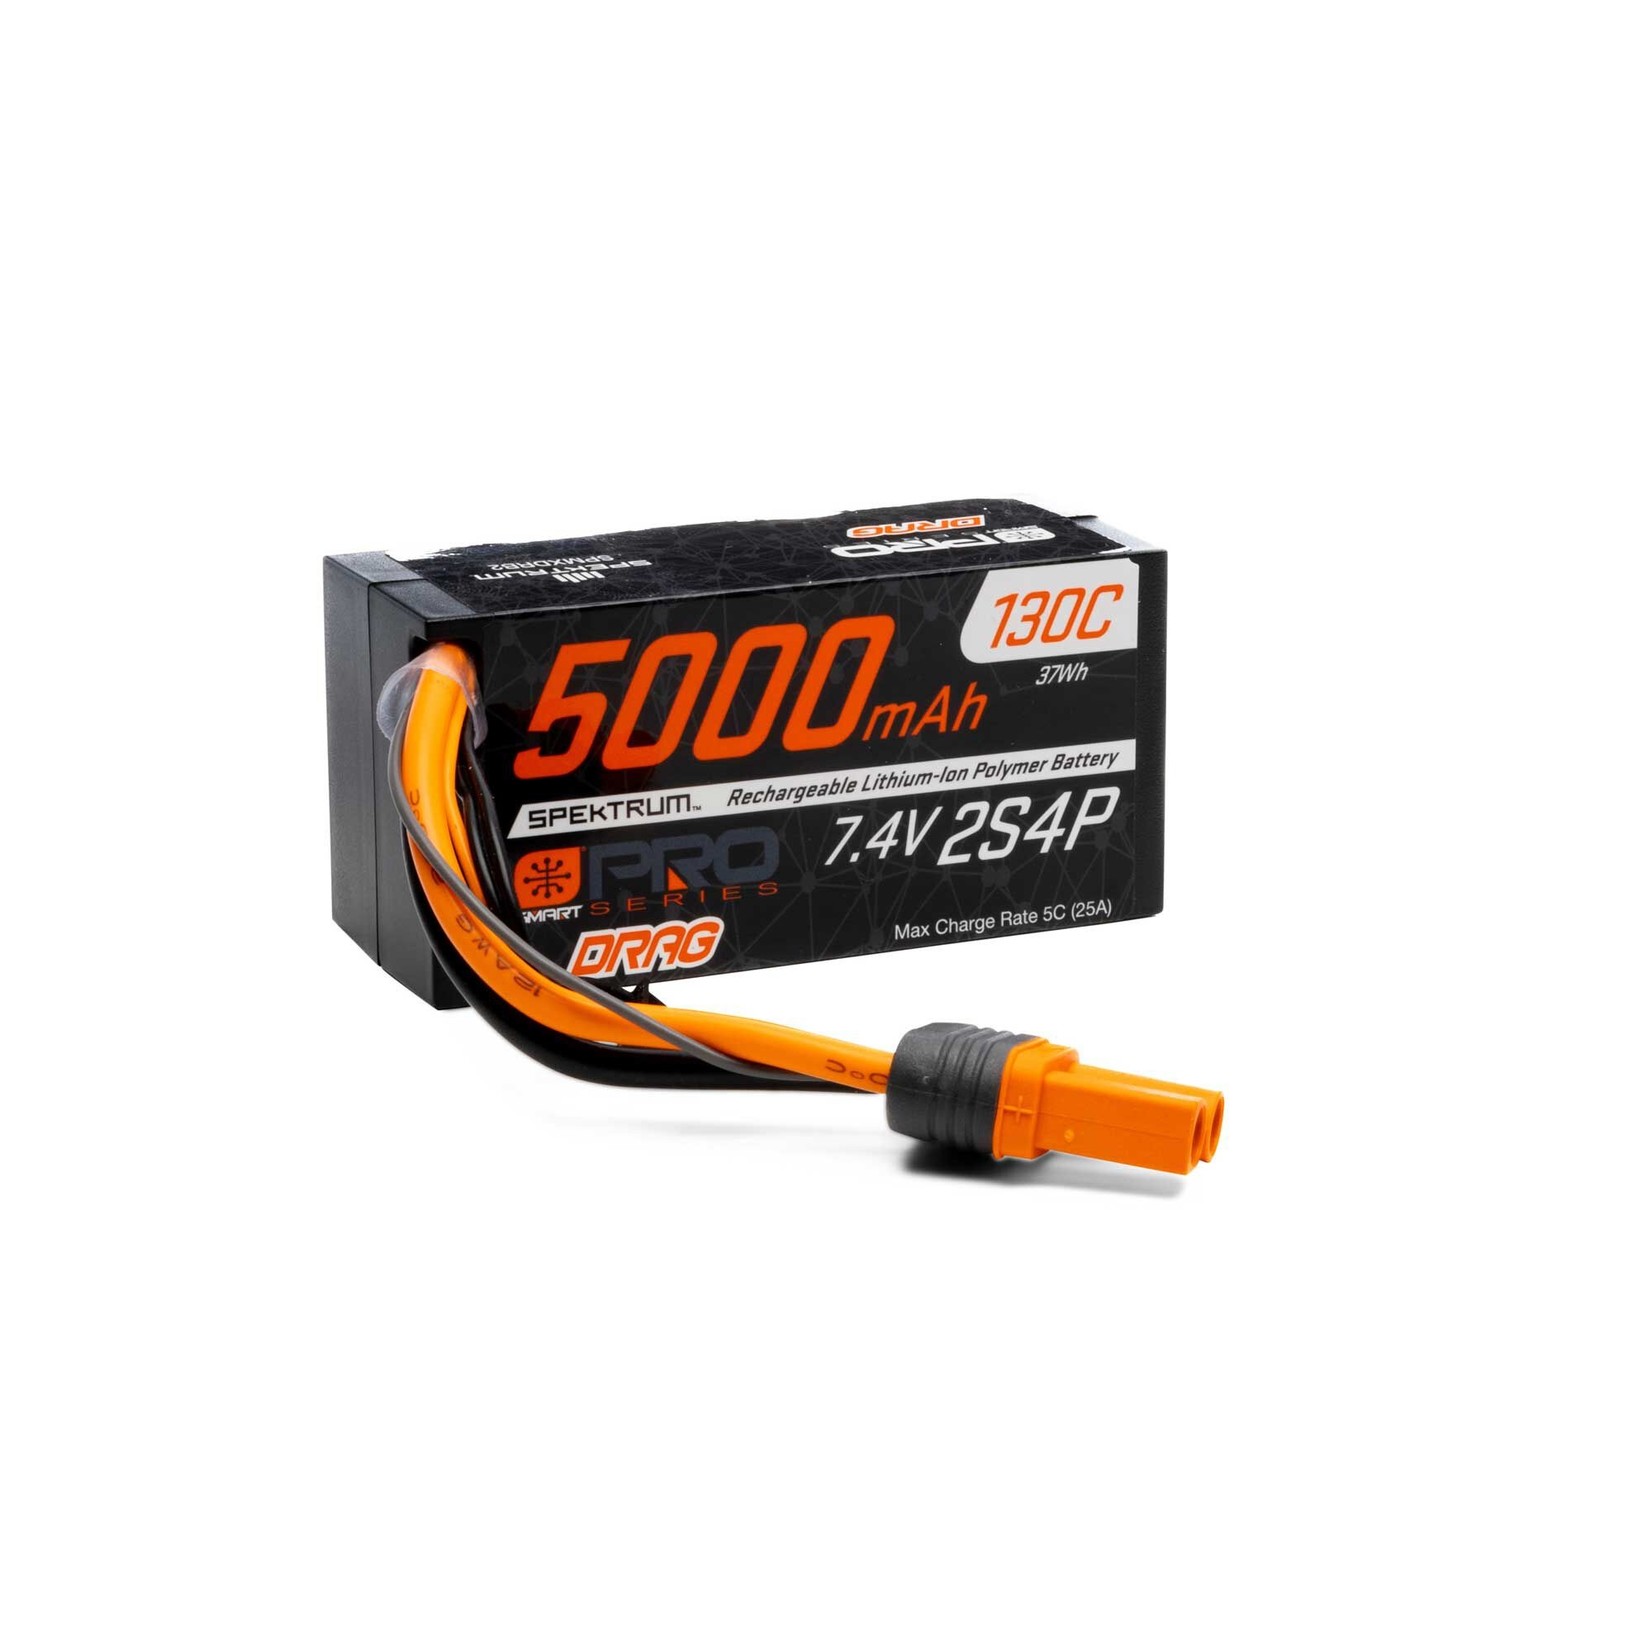 Spektrum 7.4V 5000mAh 2S 130C Smart No Prep Drag LiPo Battery: IC5